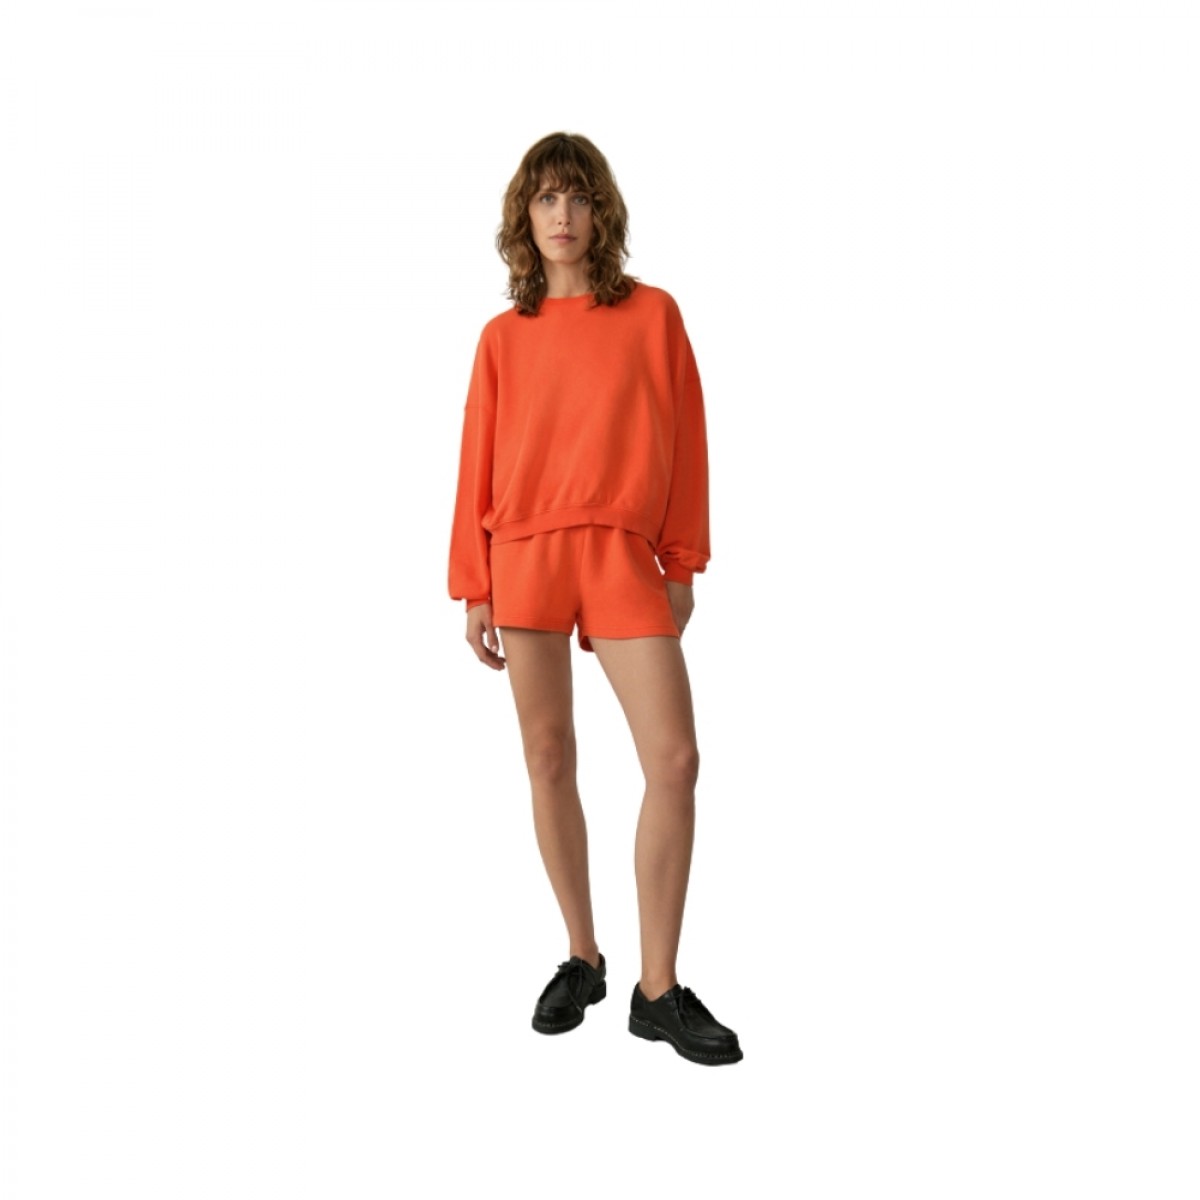 hapylife sweatshirt - vintage ember - model front